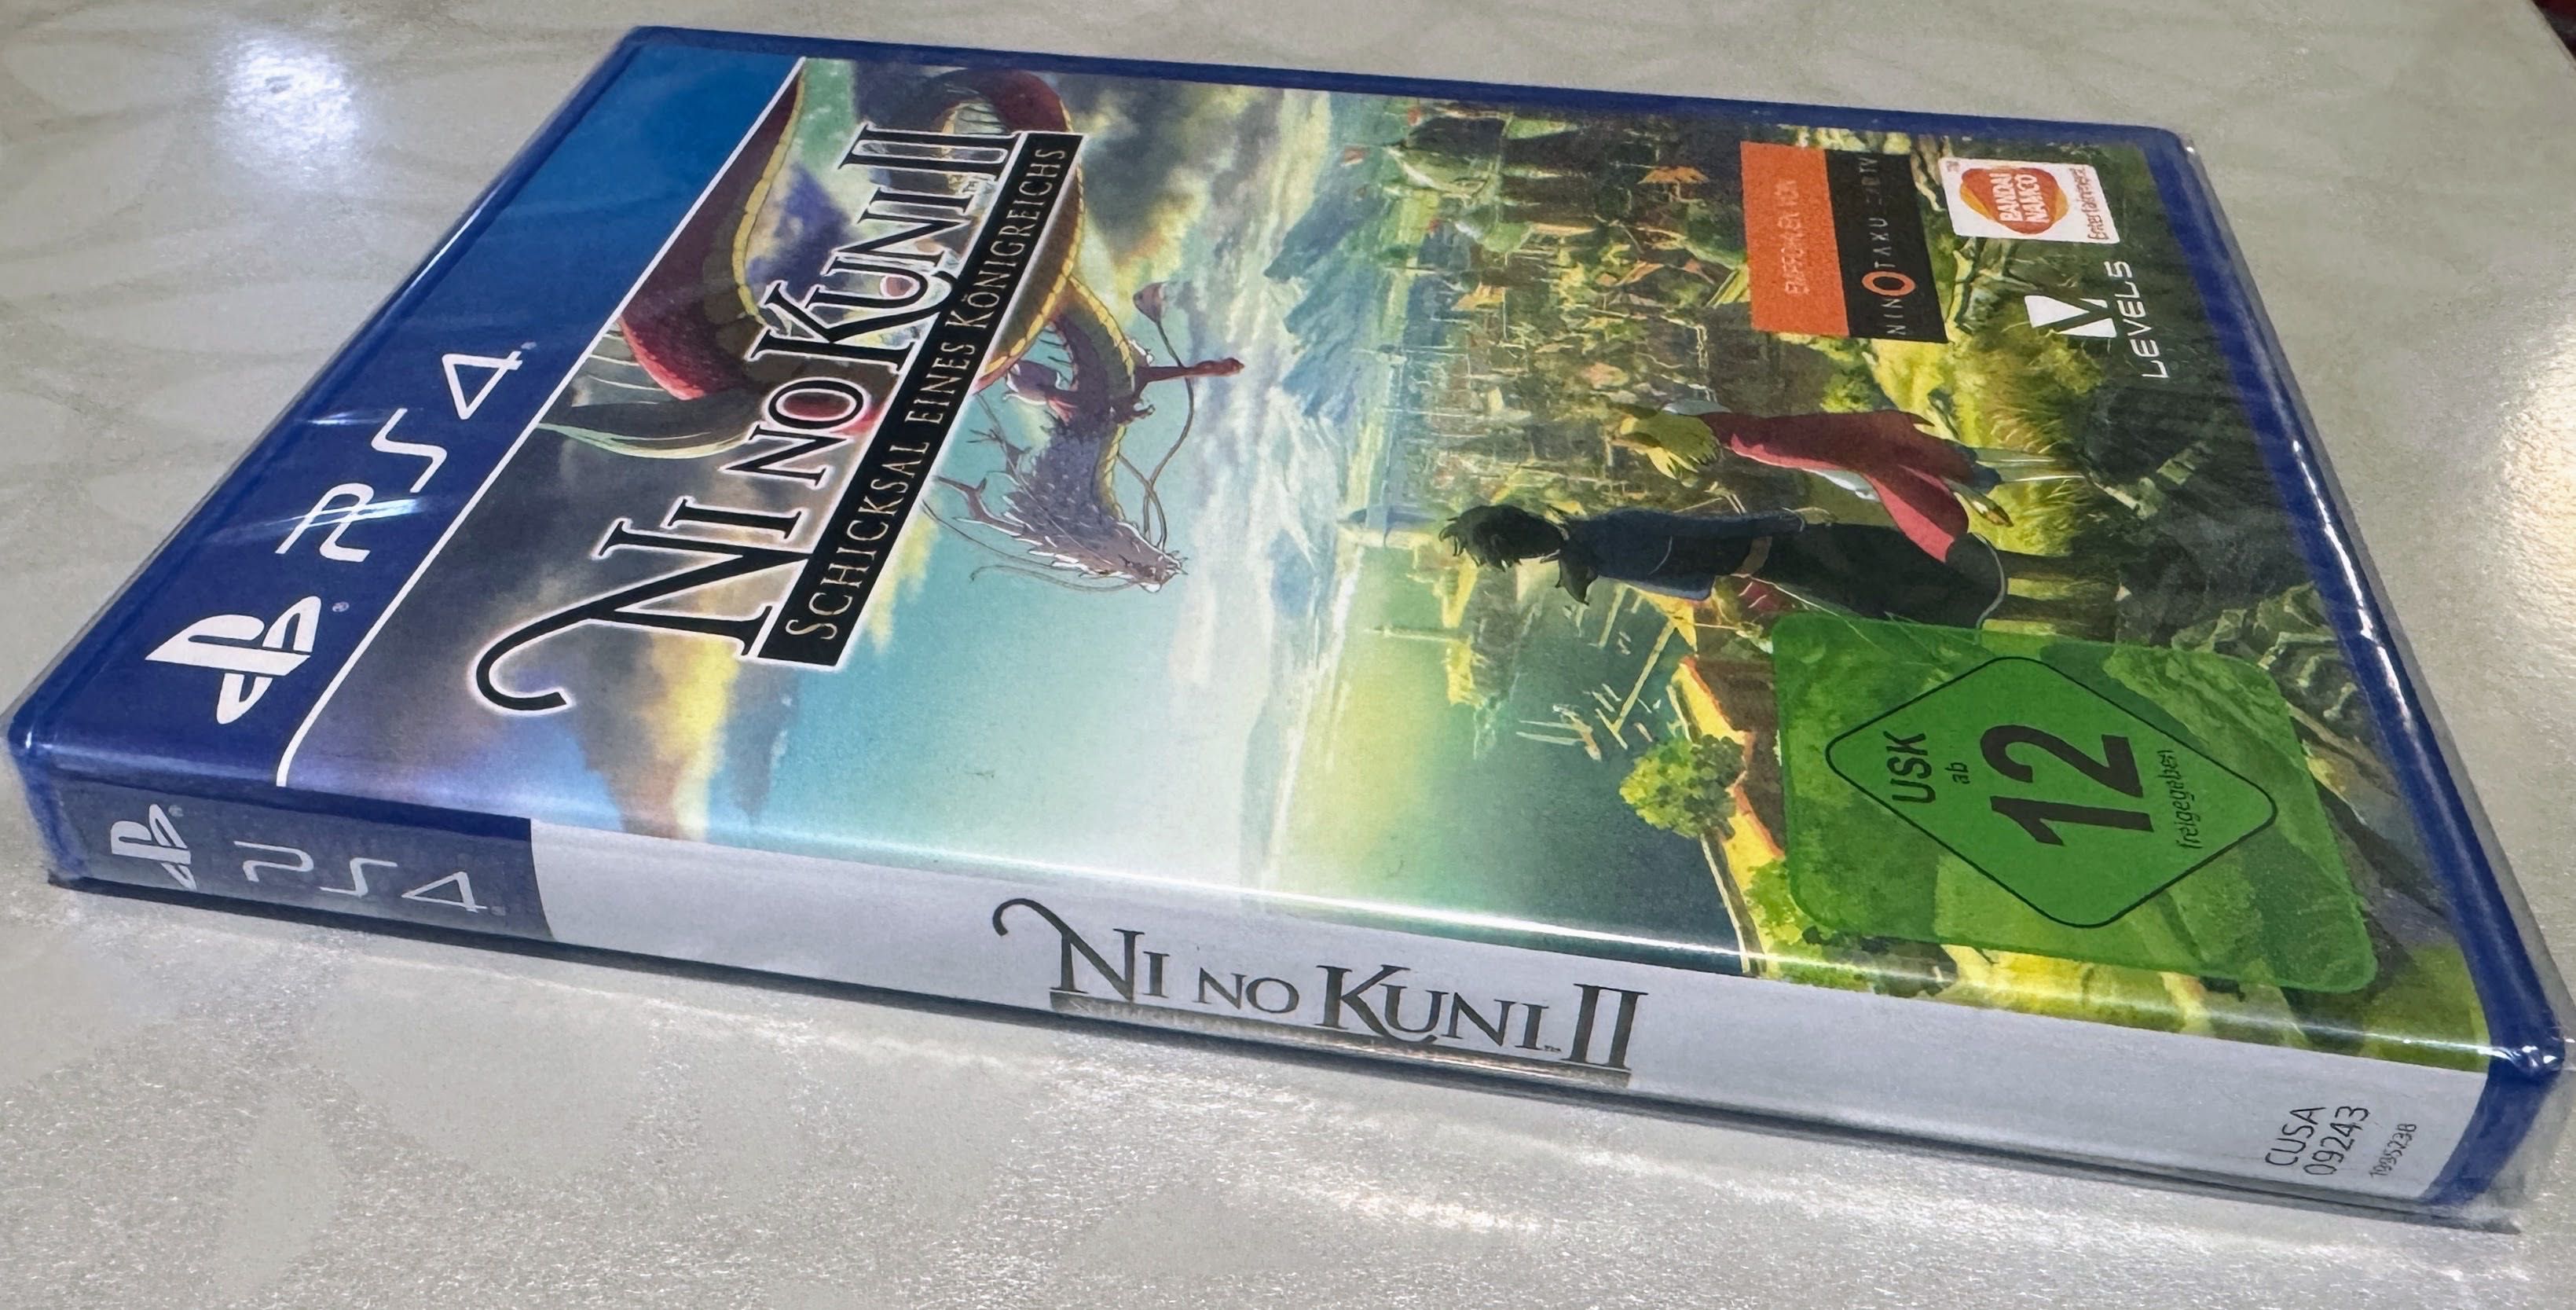 Нова у плівці гра Ni no Kuni II: Revenant Kingdom ru sub (CUSA 09243)